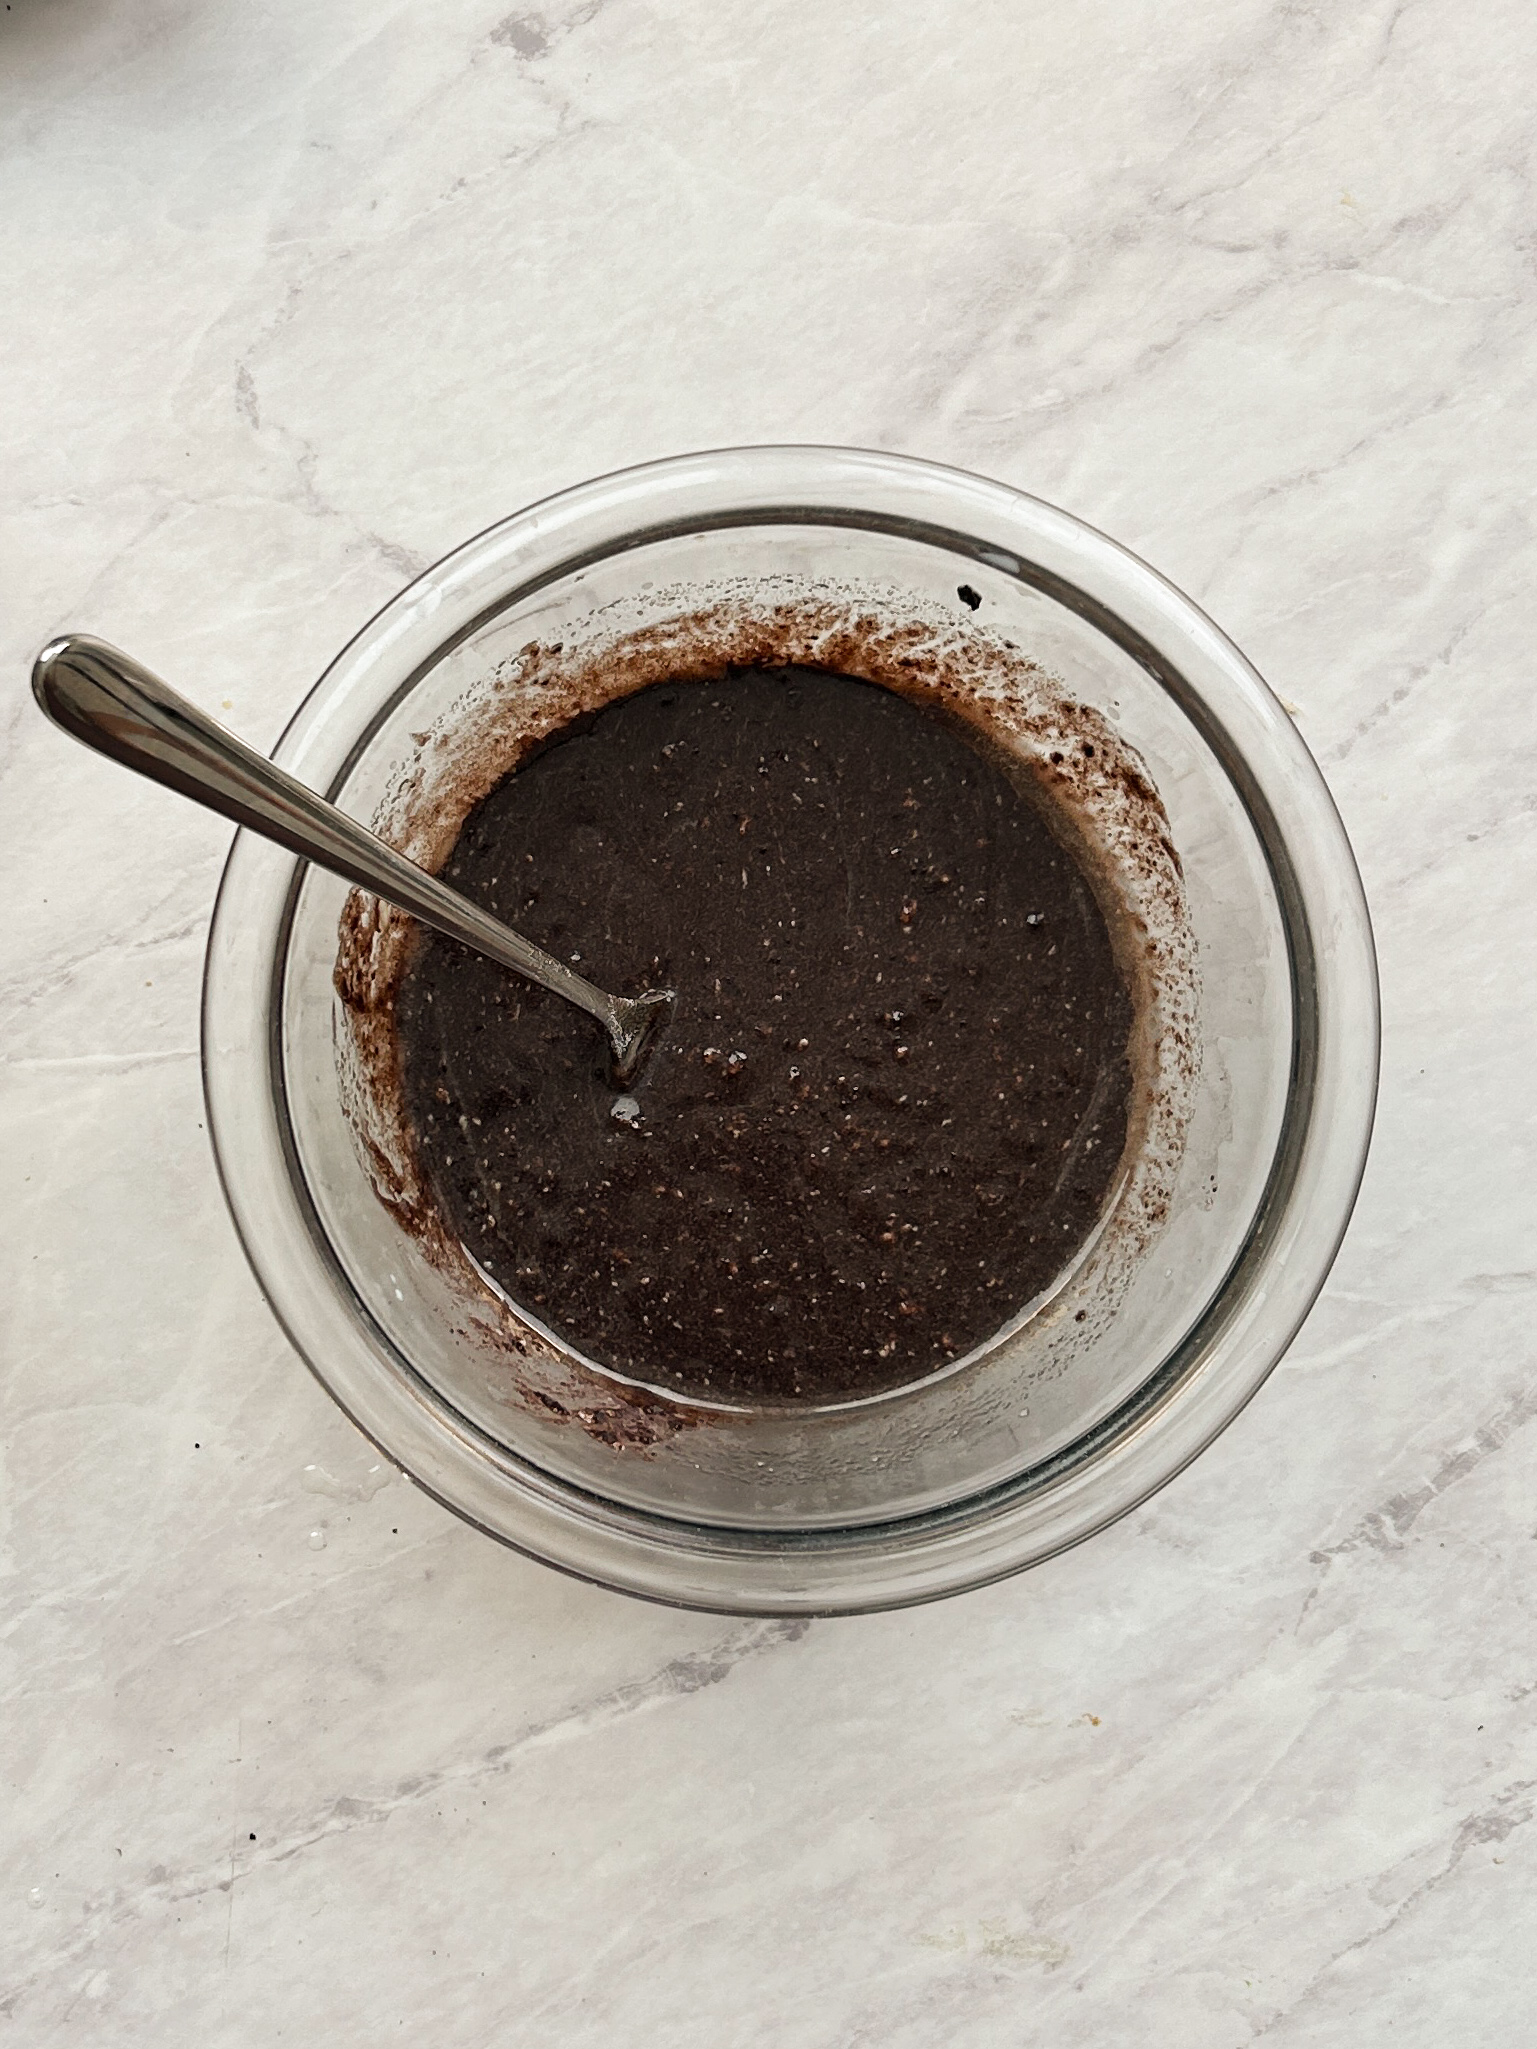 process of making chocolate mug cake batter